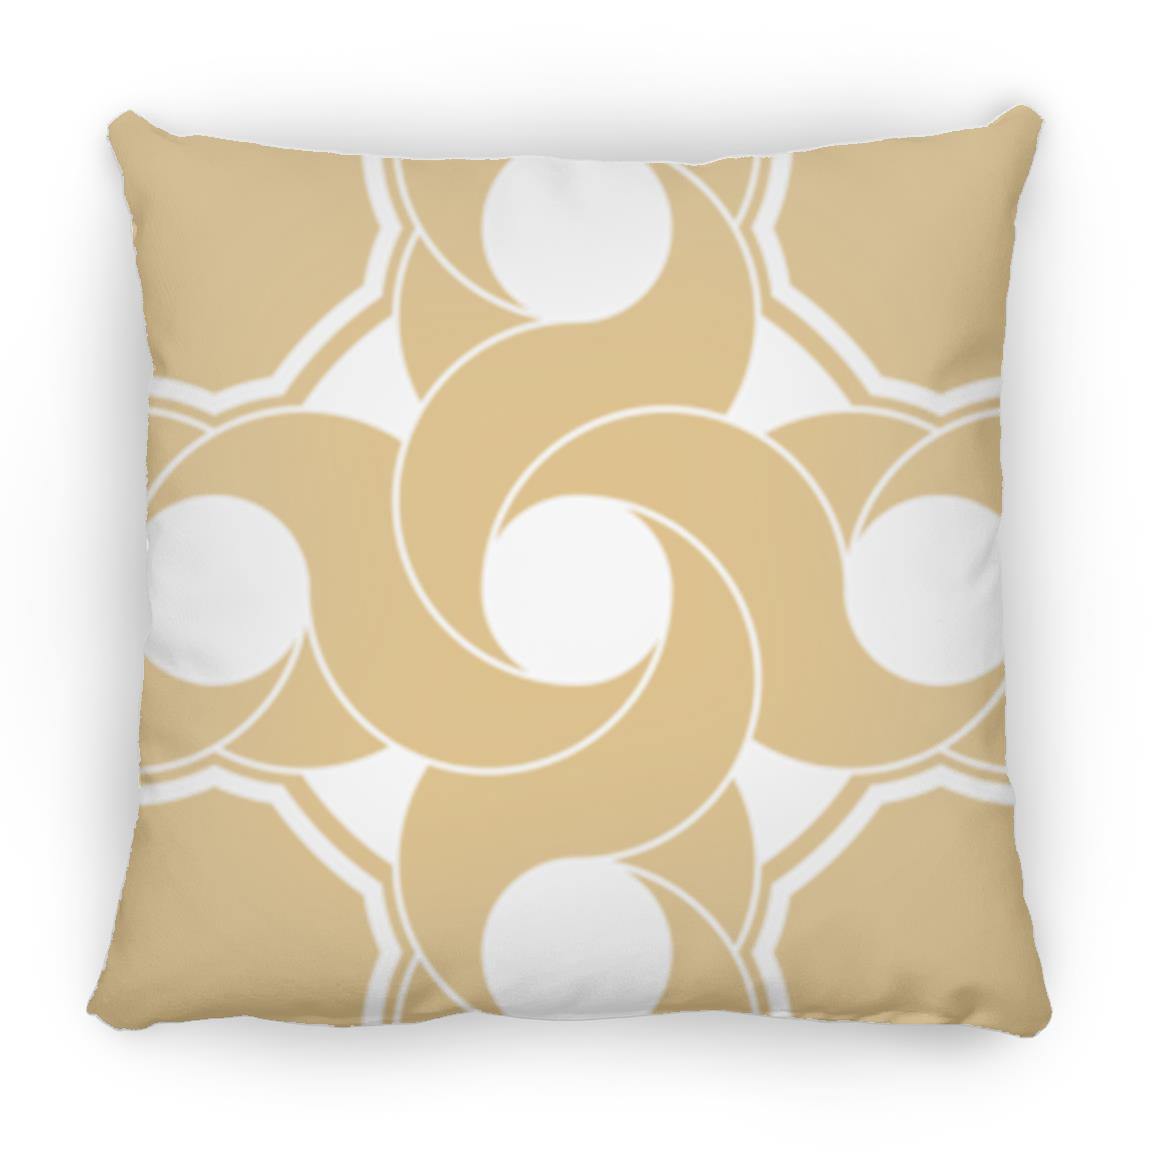 Crop Circle Pillow - Etchilhampton - Shapes of Wisdom